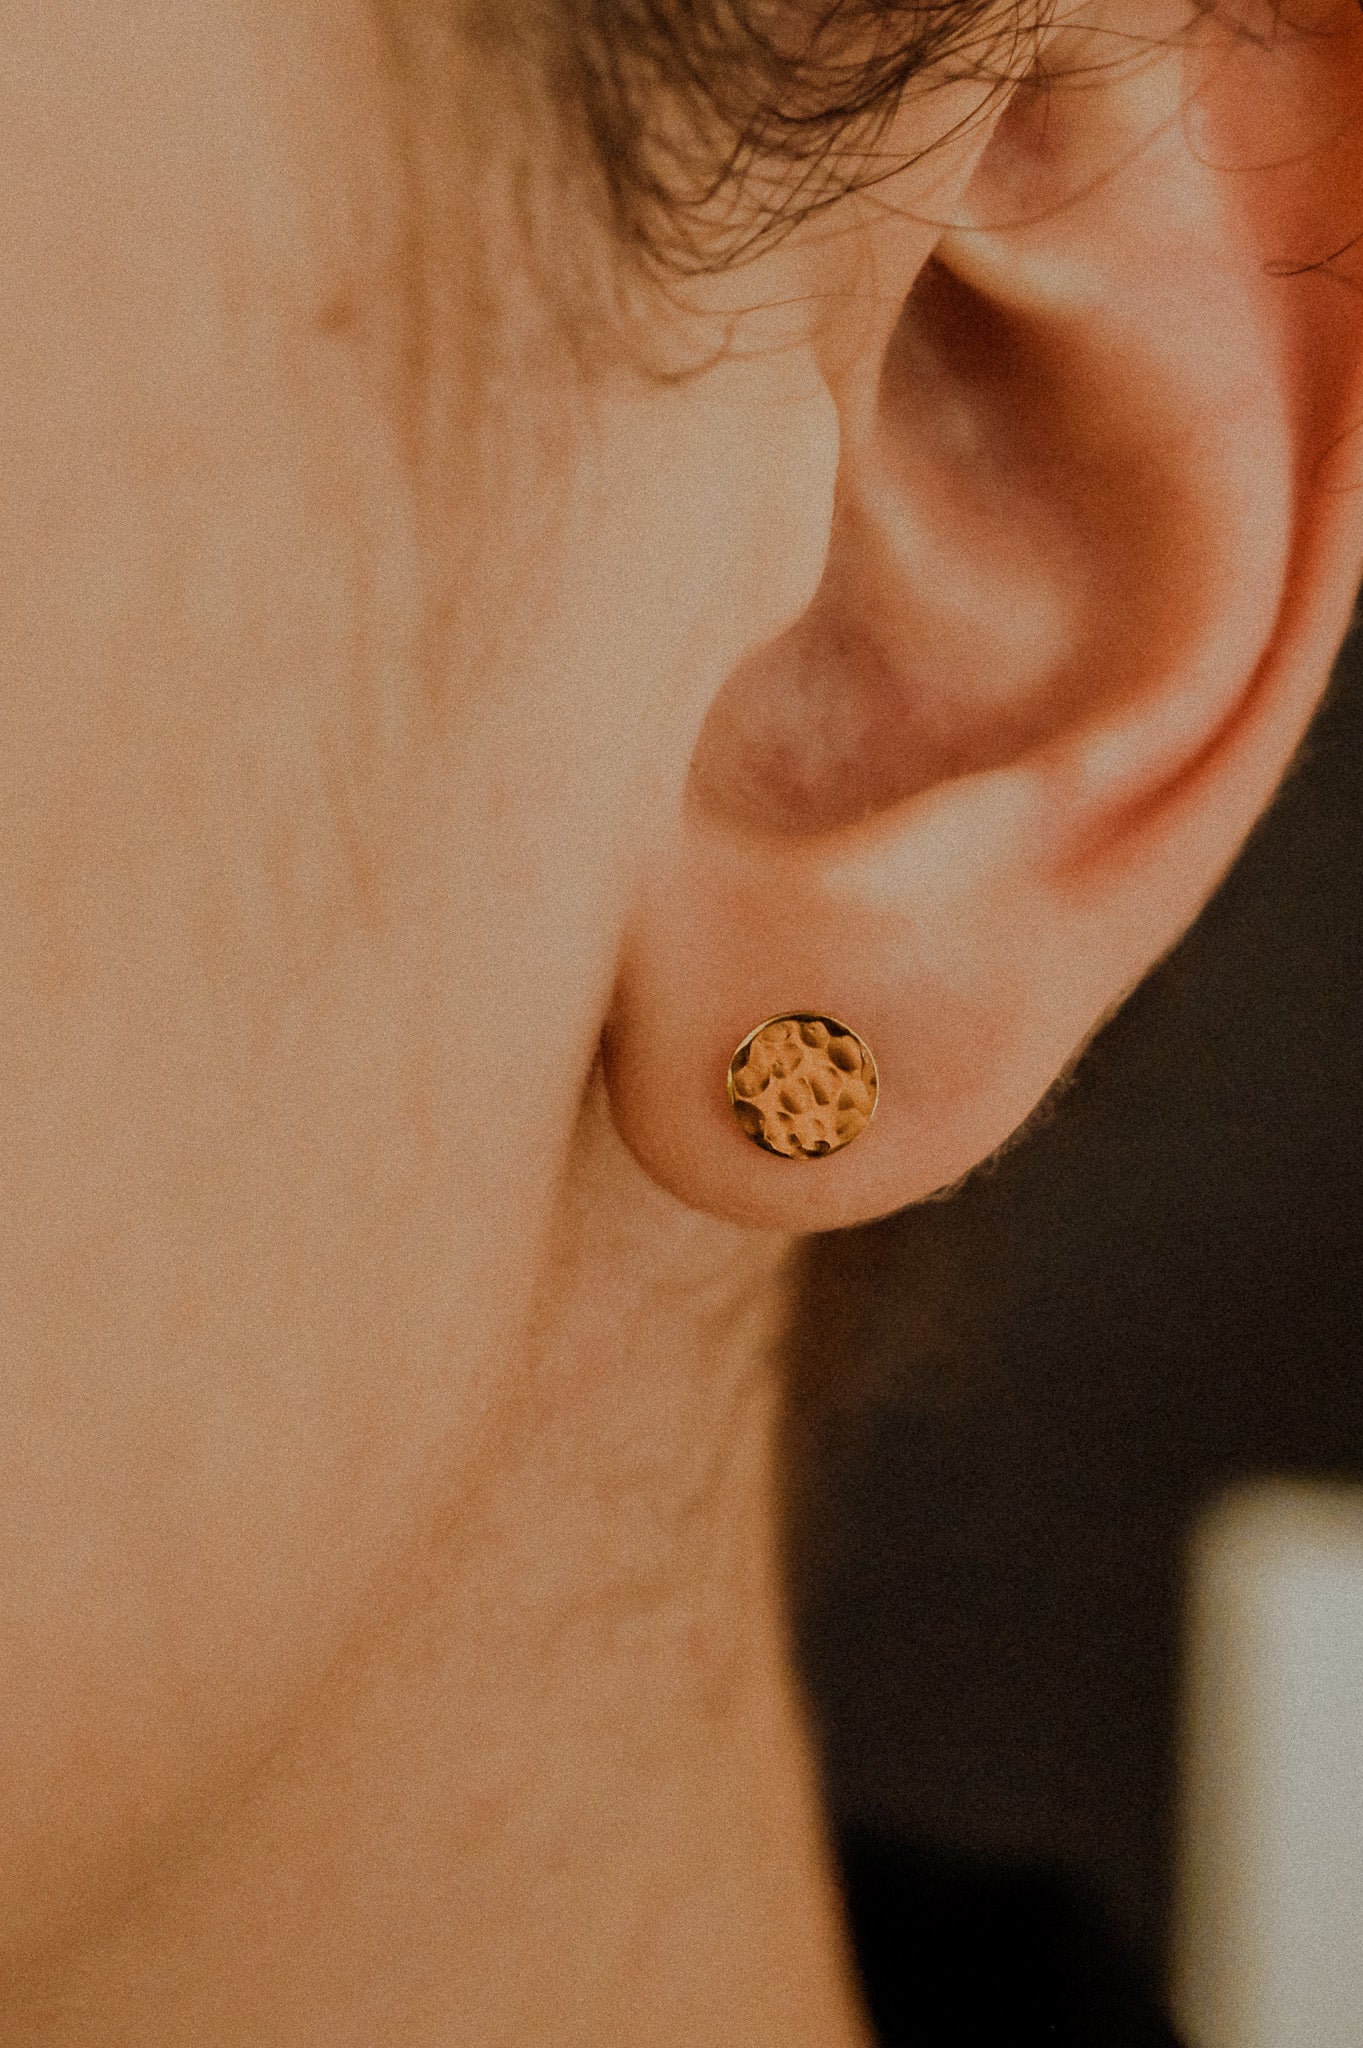 Dot Flat Back Stud Earring, Solid Gold or Rose Gold